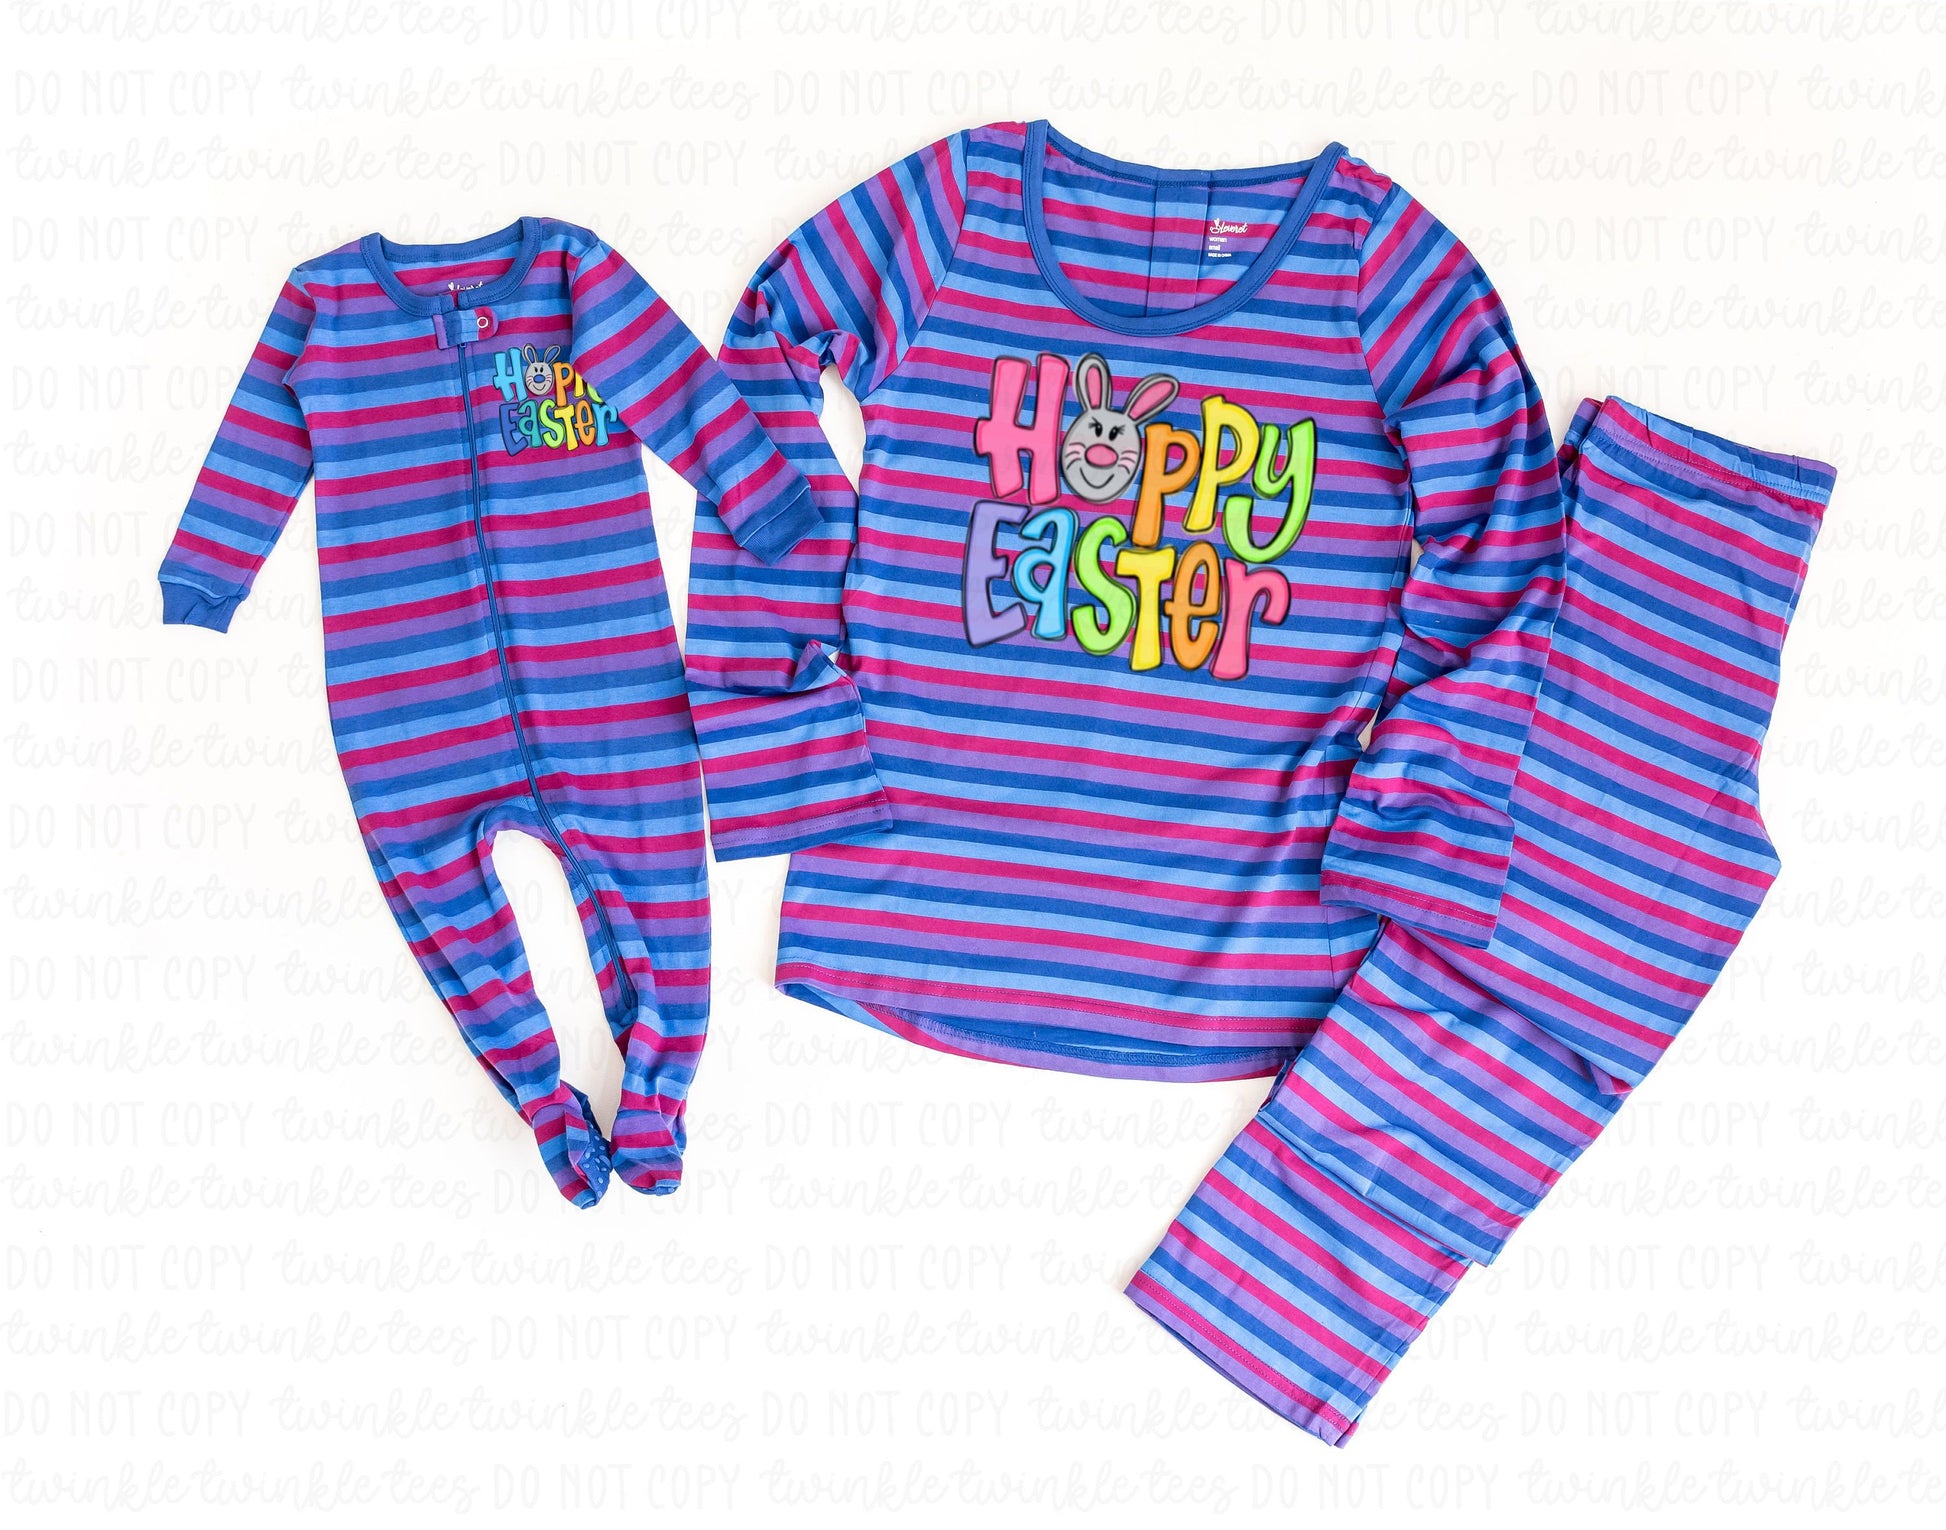 Happy Easter Purple Stripe Pajamas, easter pajamas for the family, matching easter pajamas